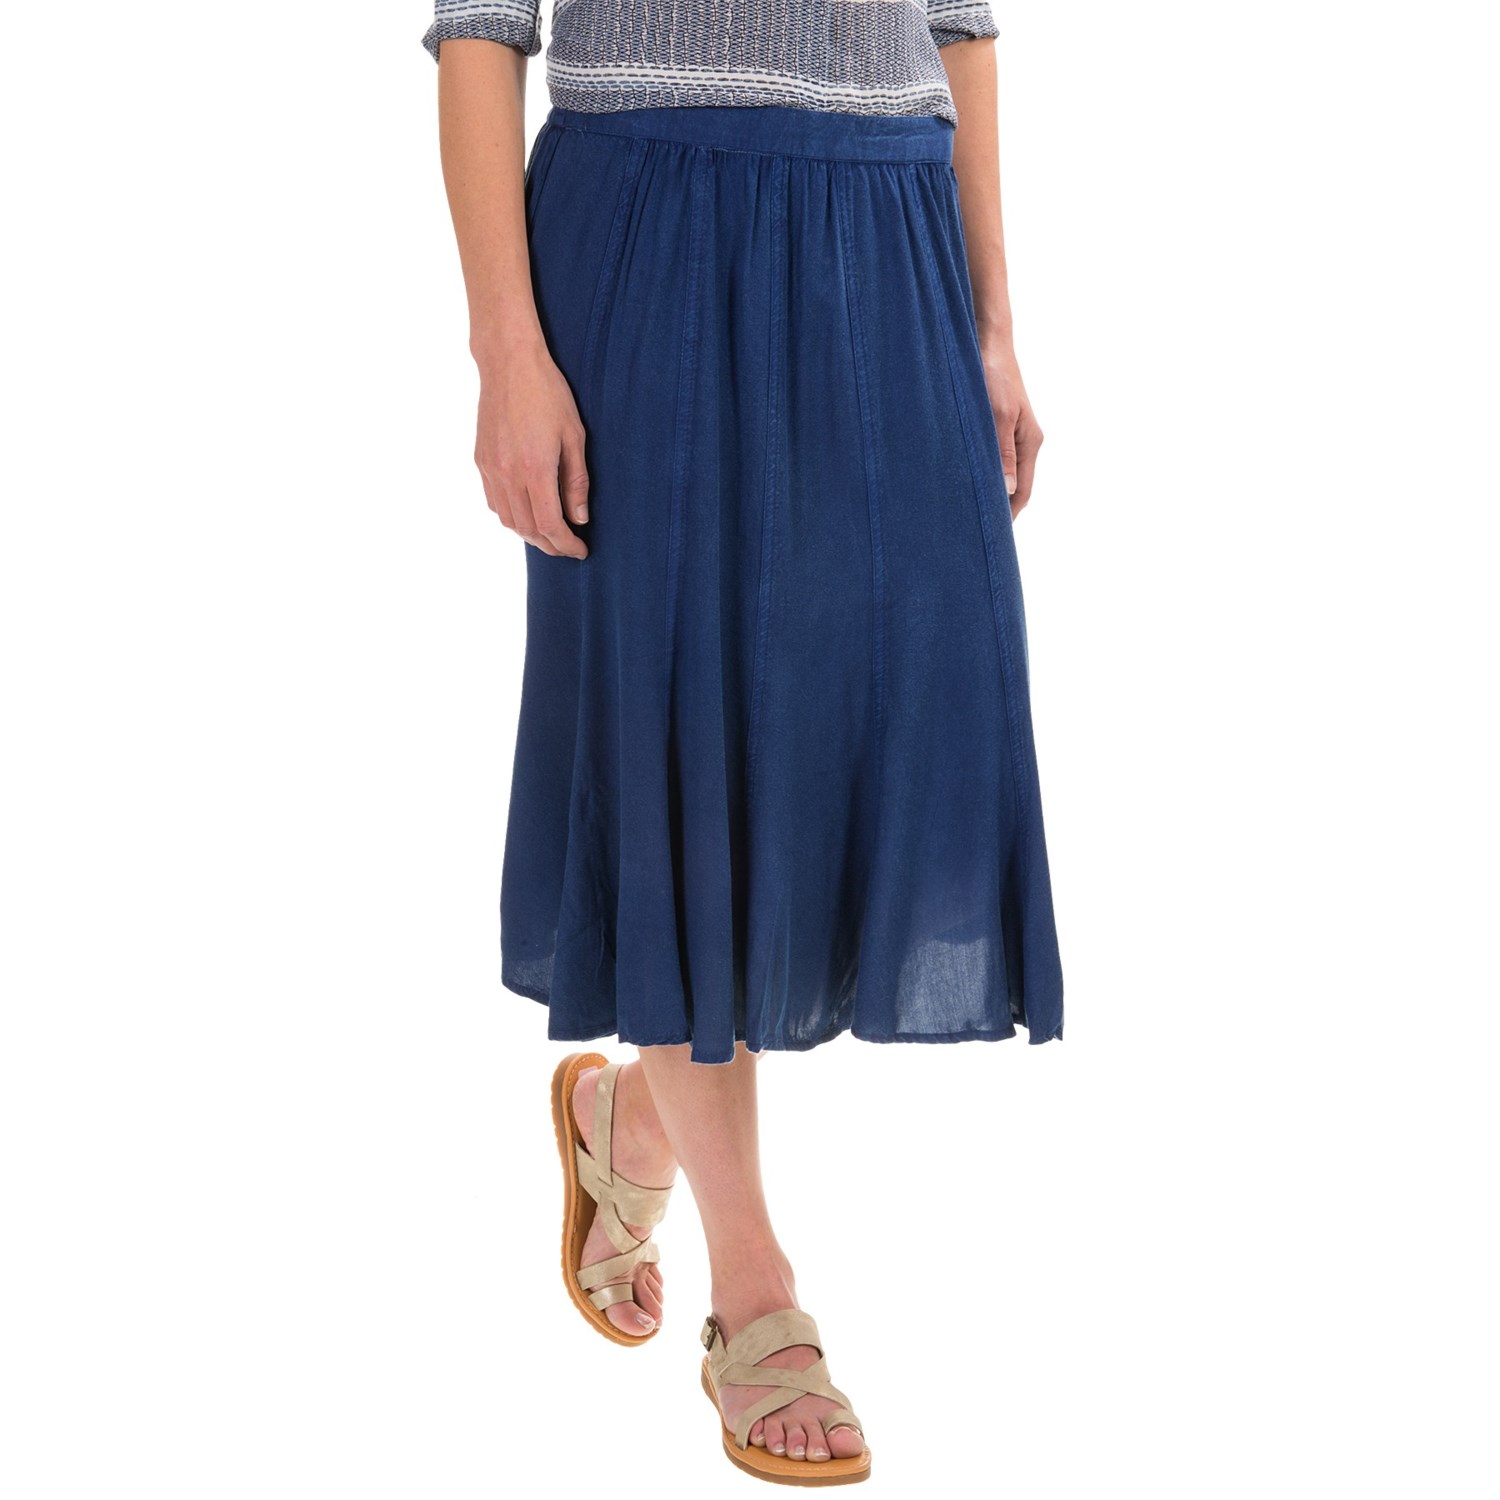 Studio West Rayon Skirt (For Women) - Save 46%